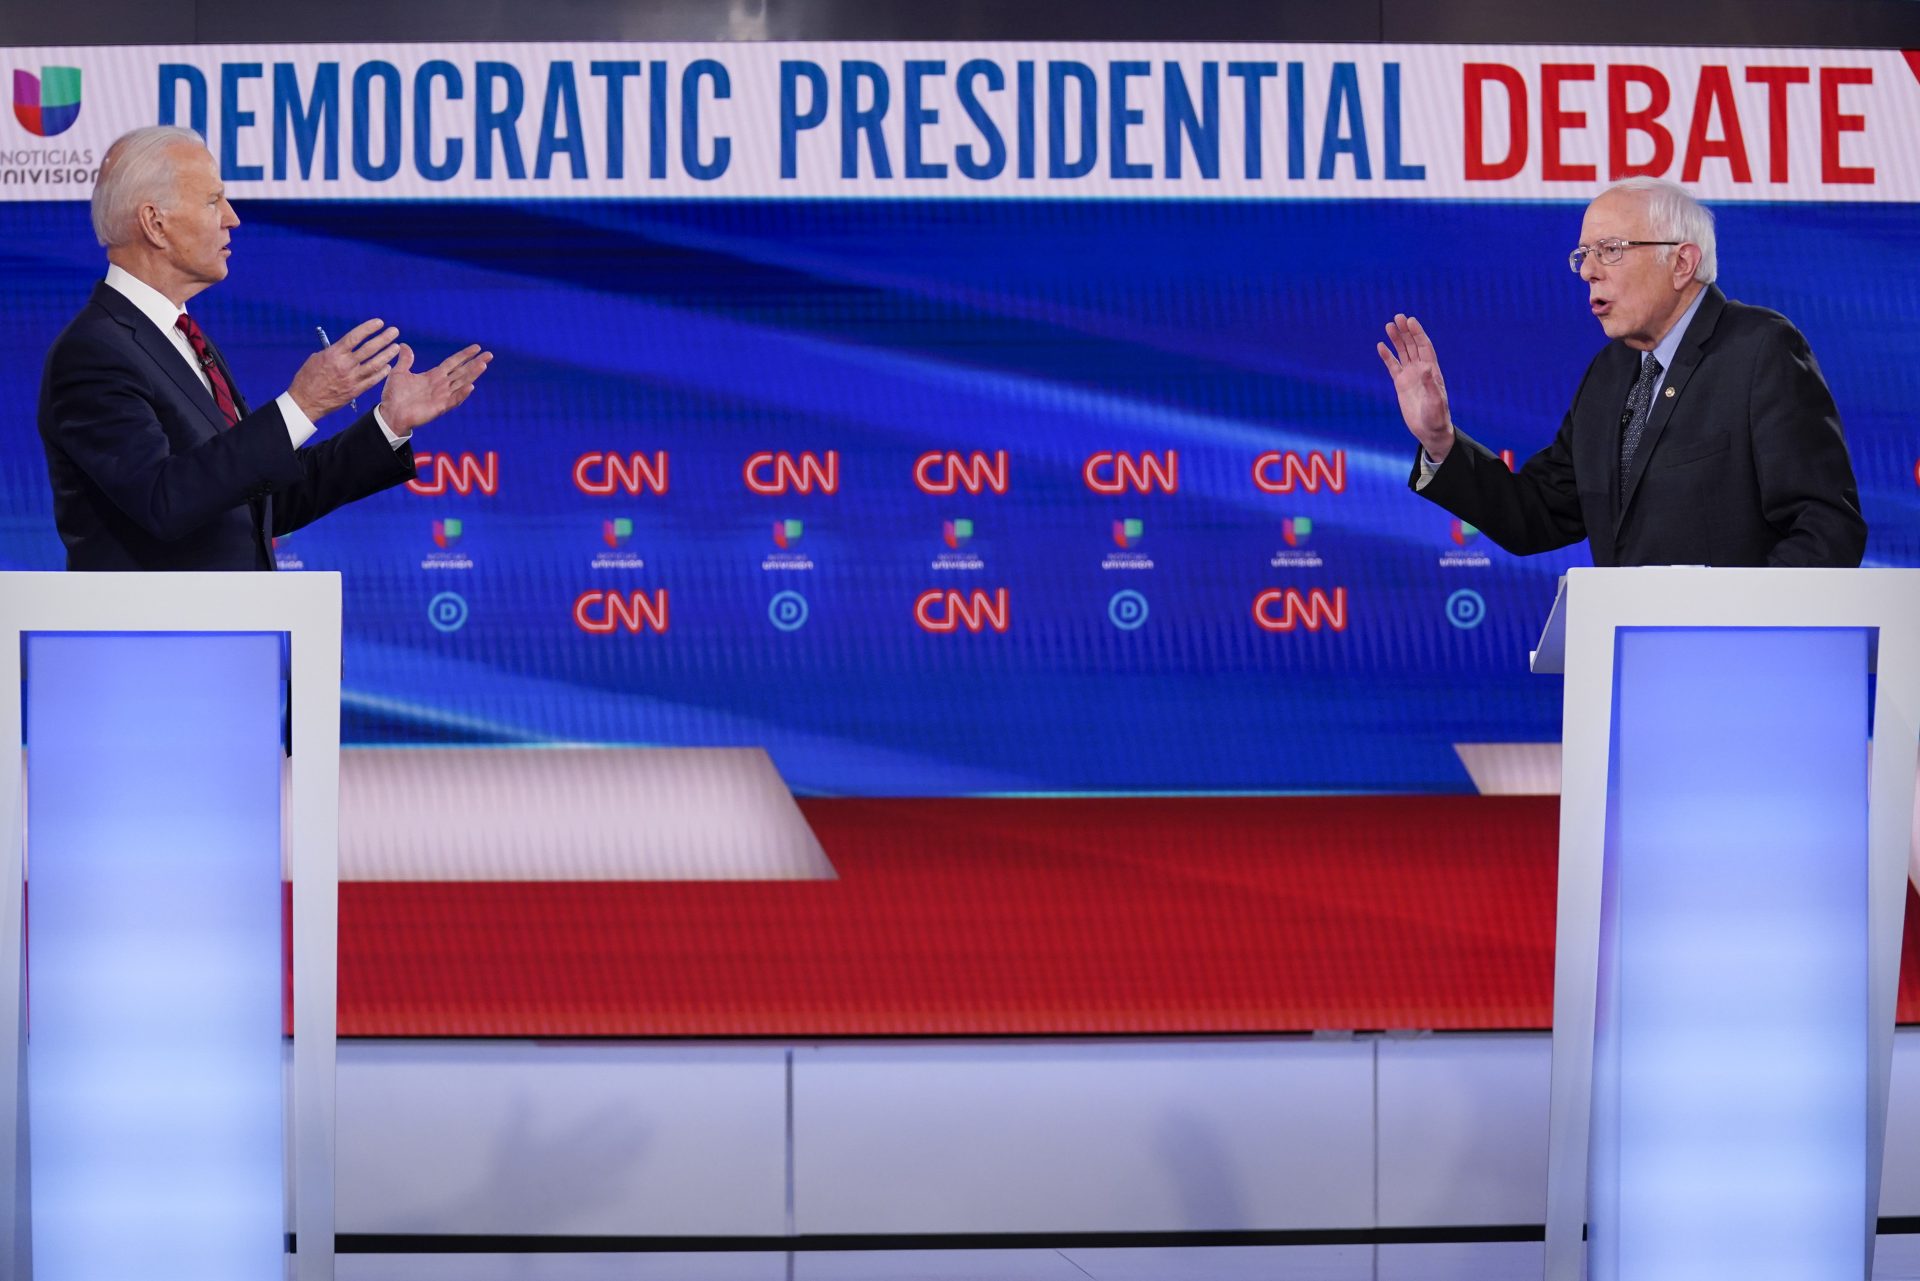 Former Vice President Joe Biden, left, and Sen. Bernie Sanders, I-Vt., right, participate in a Democratic presidential primary debate at CNN Studios in Washington, Sunday, March 15, 2020.